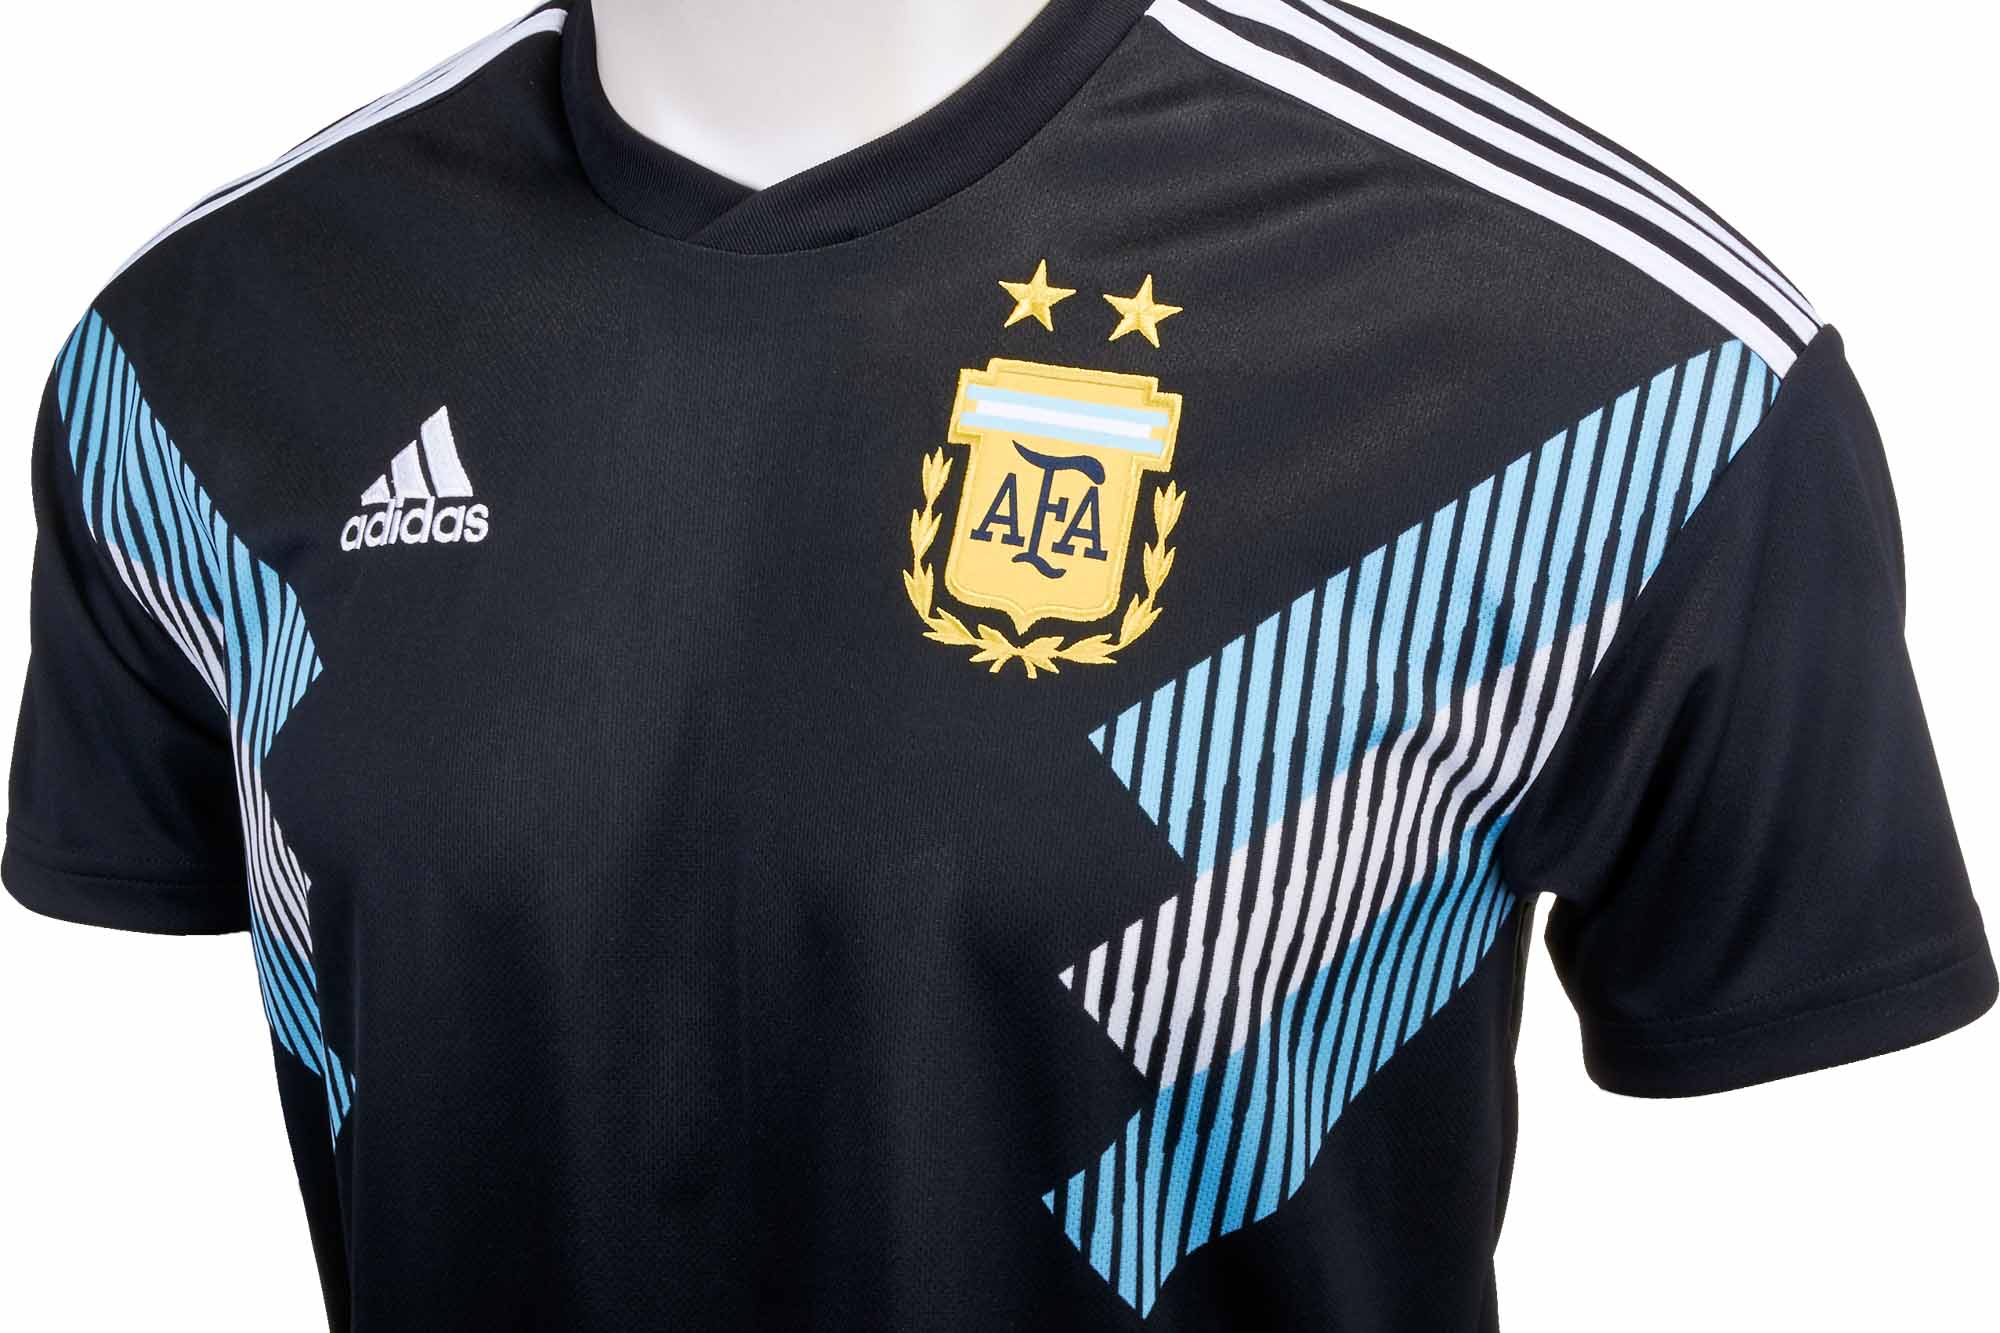 argentina new away jersey